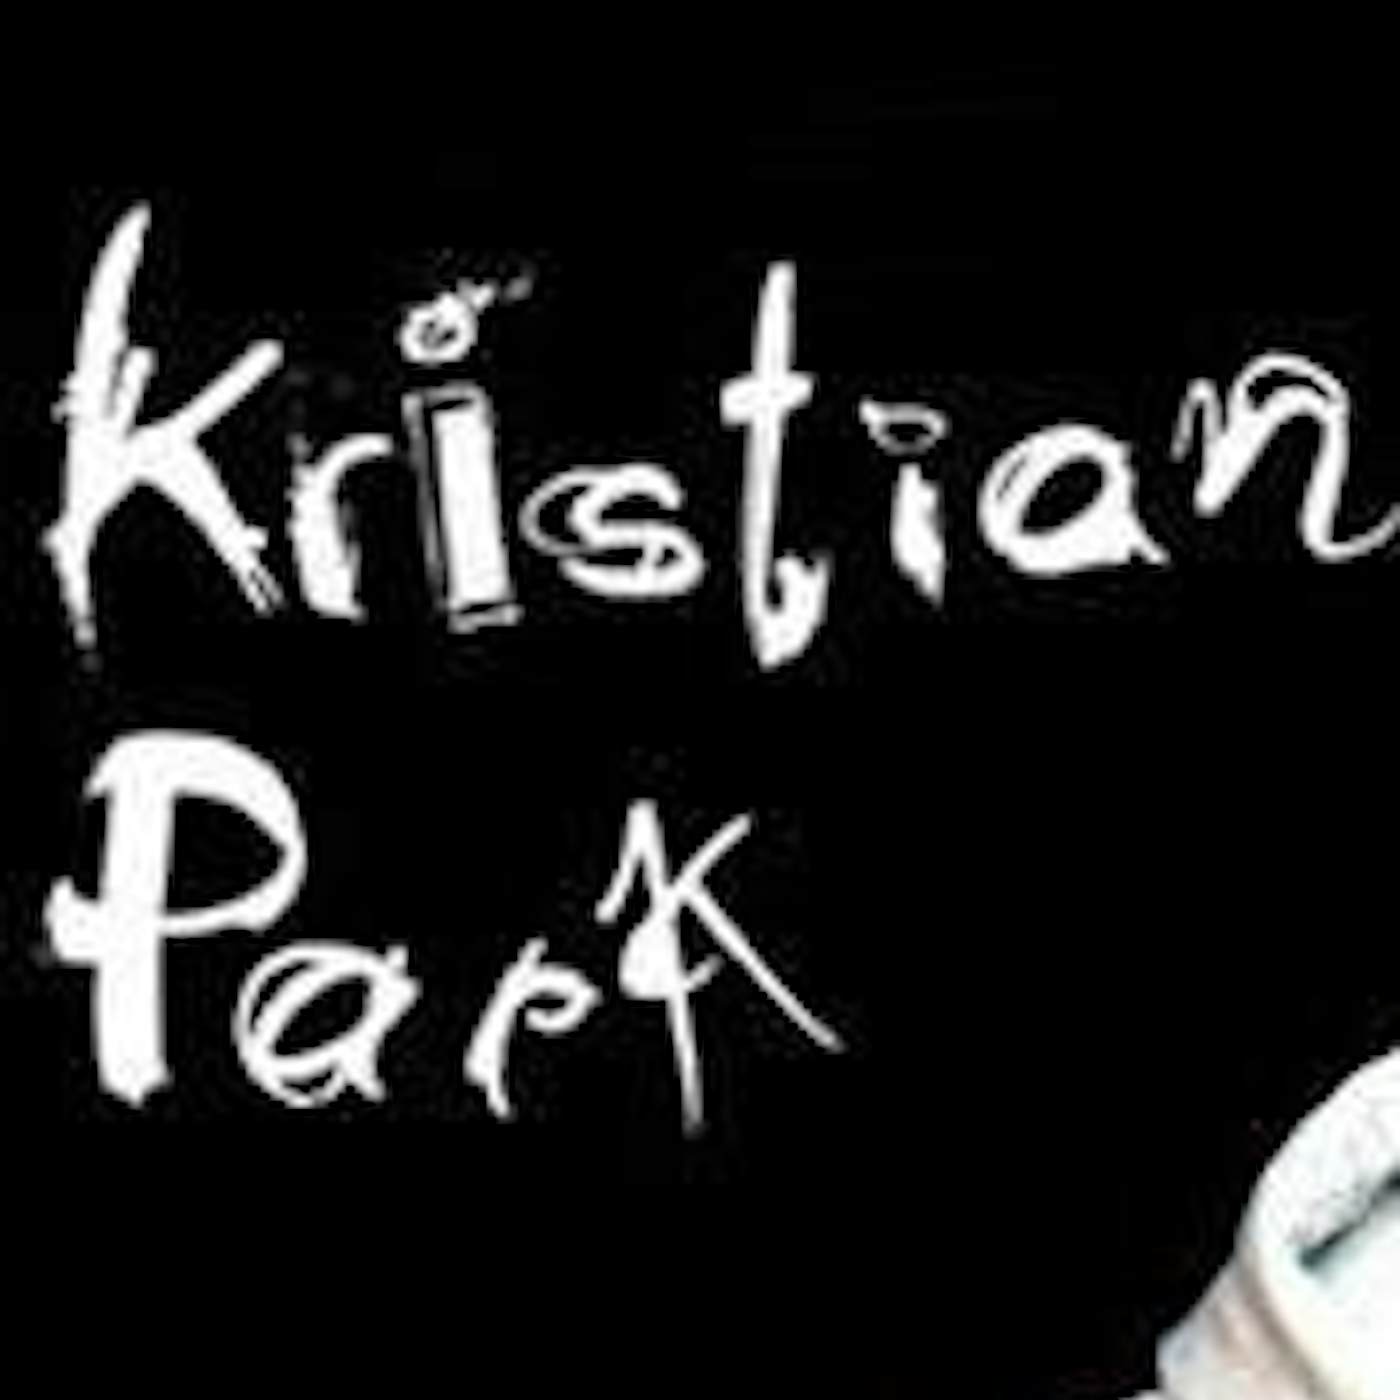 Kristian Park